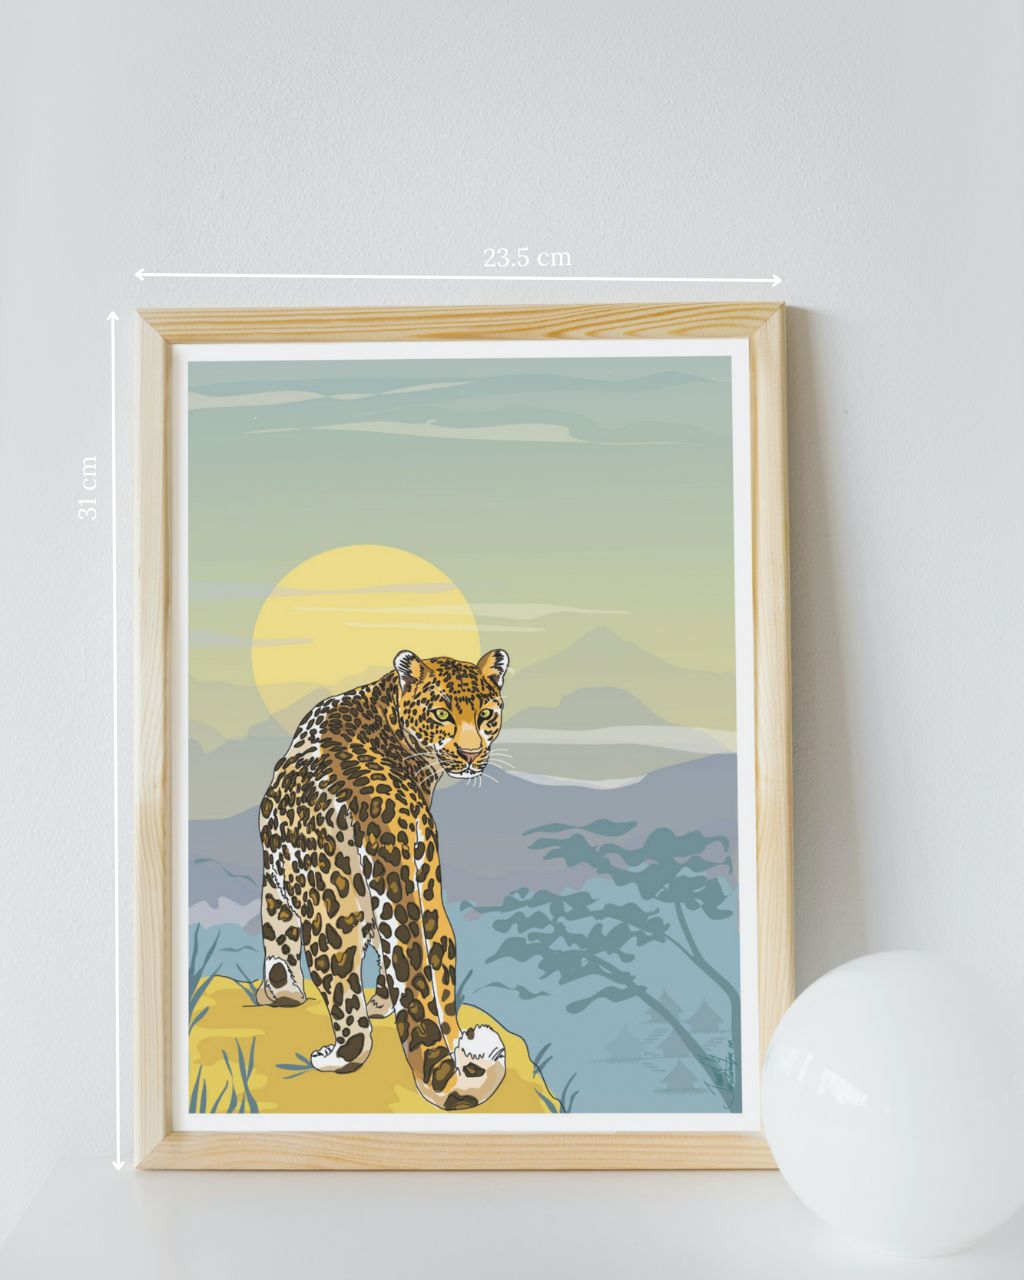 Mini poster amanecer jaguar enmarcado artesanal.